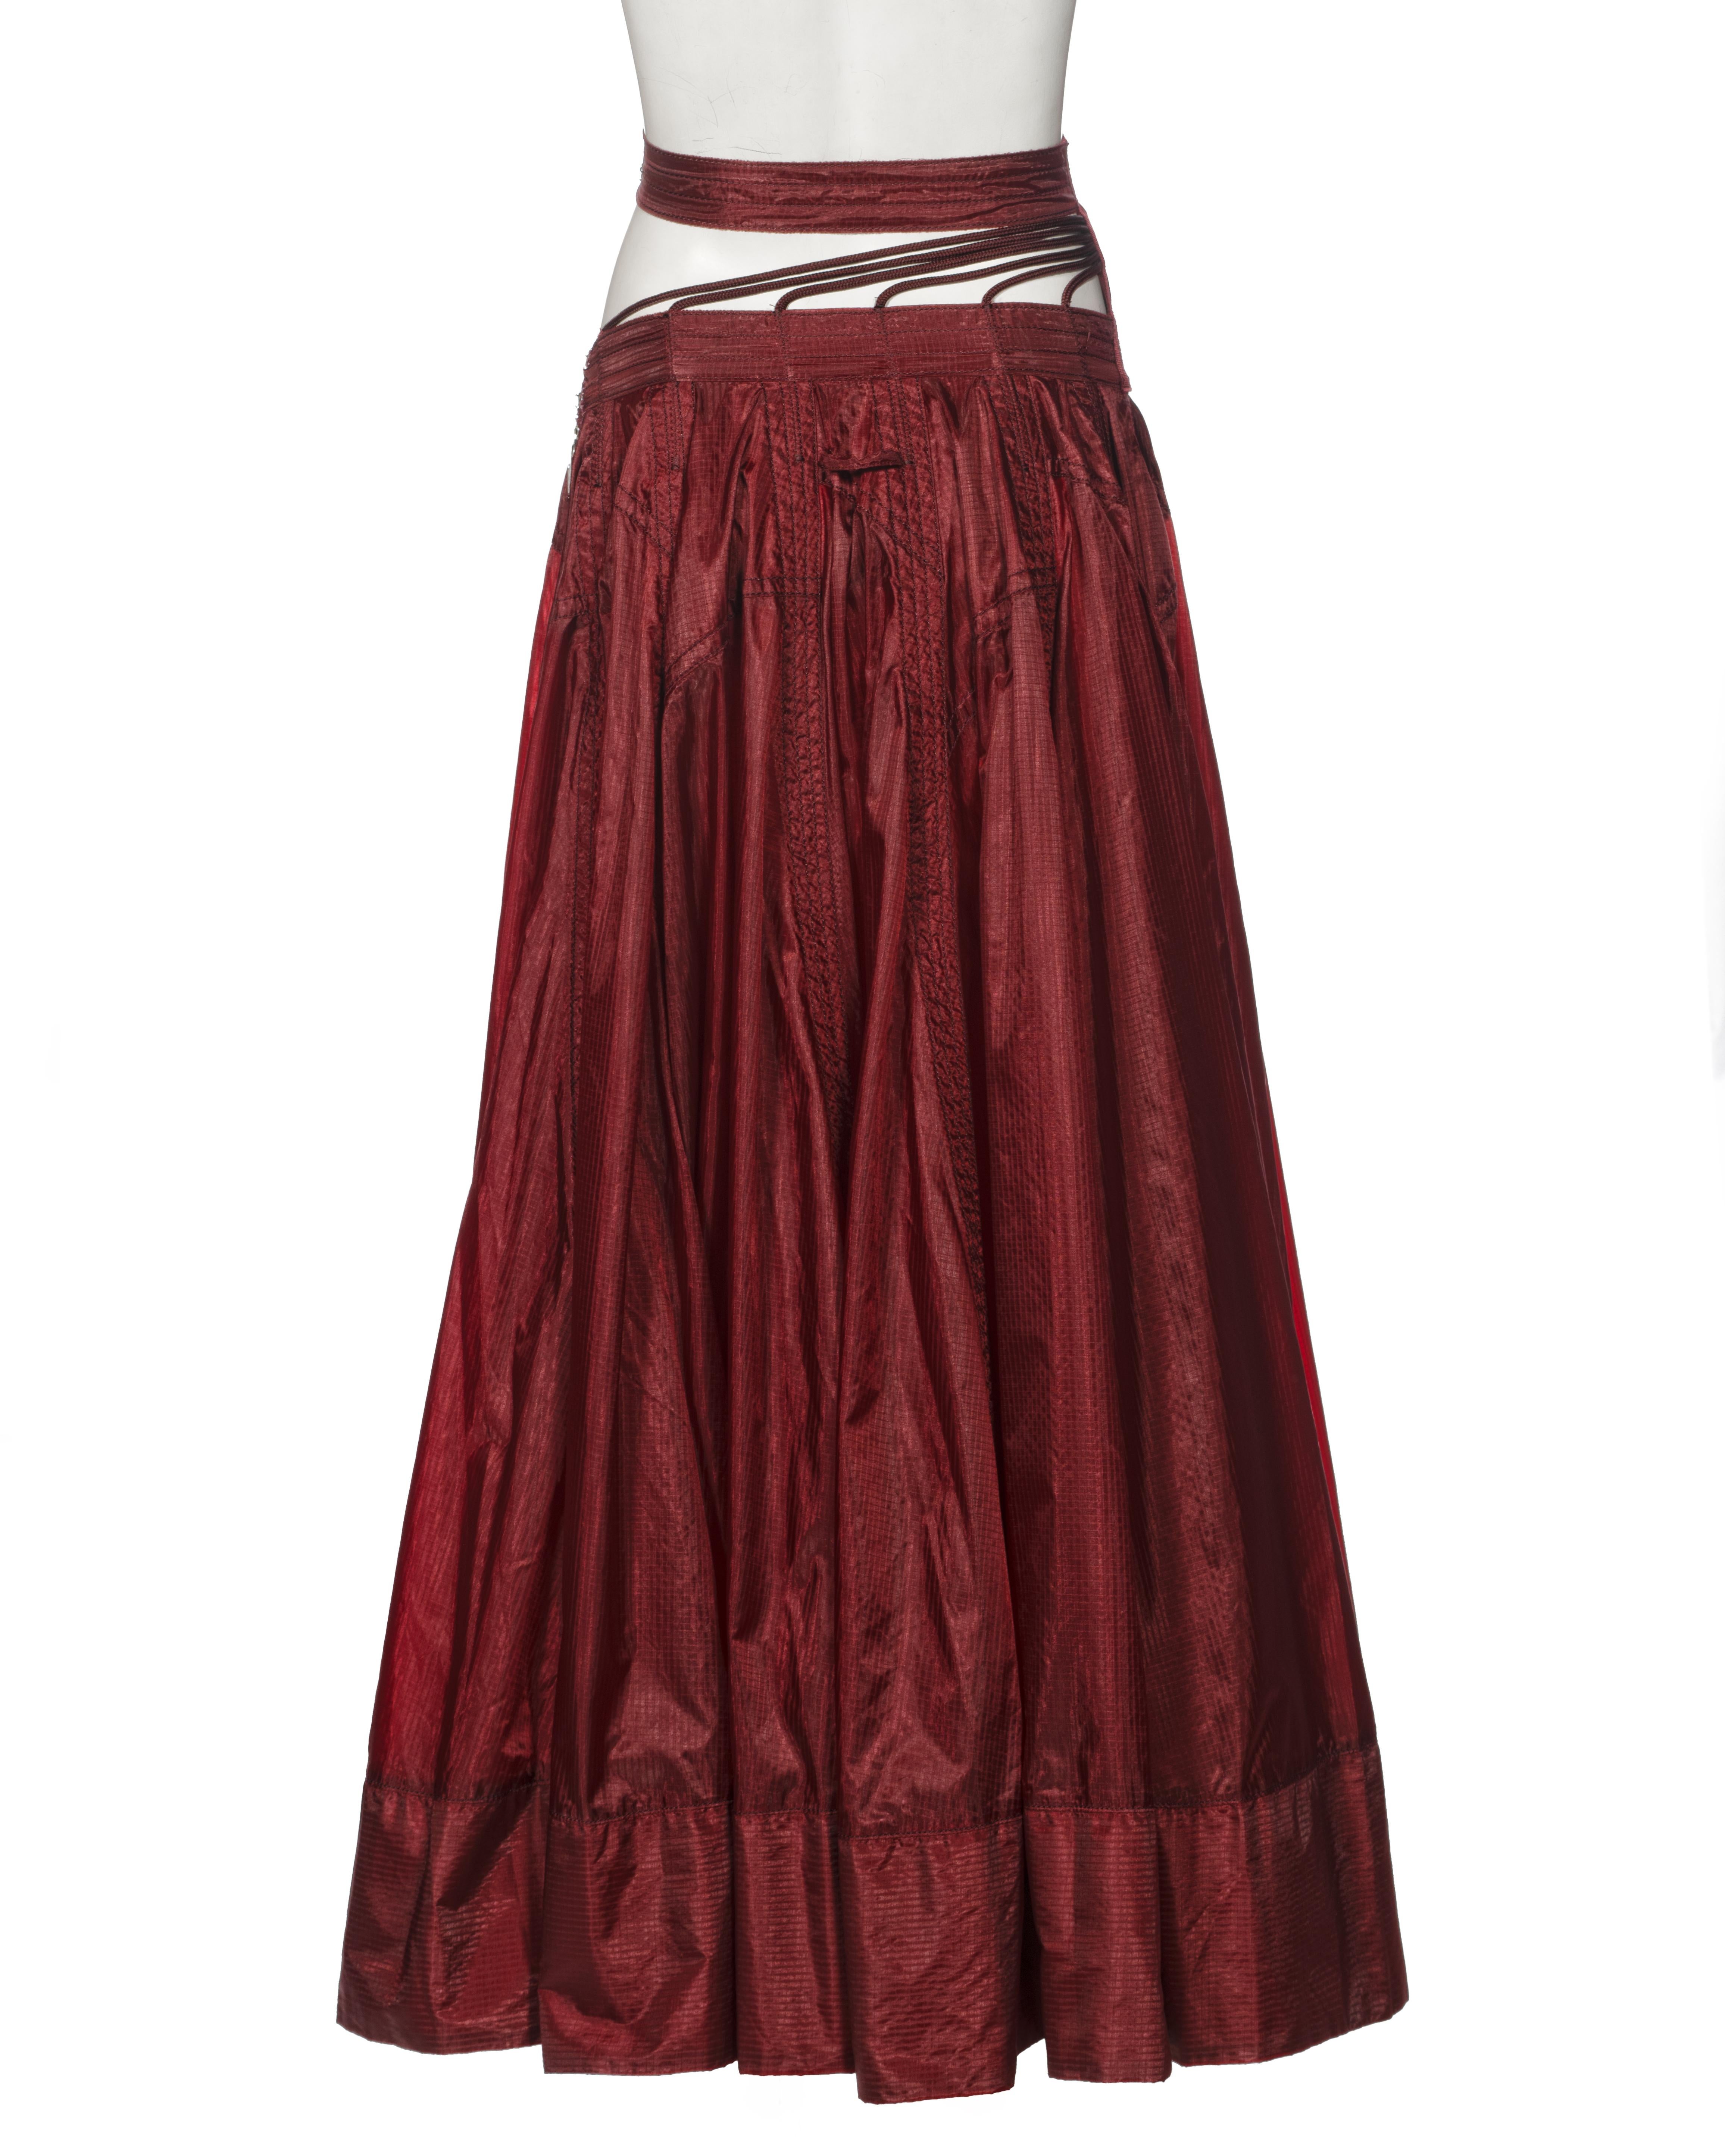 Jean Paul Gaultier Burgundy Ripstop Nylon Strappy-Waist Maxi Skirt, ss 2002 For Sale 4